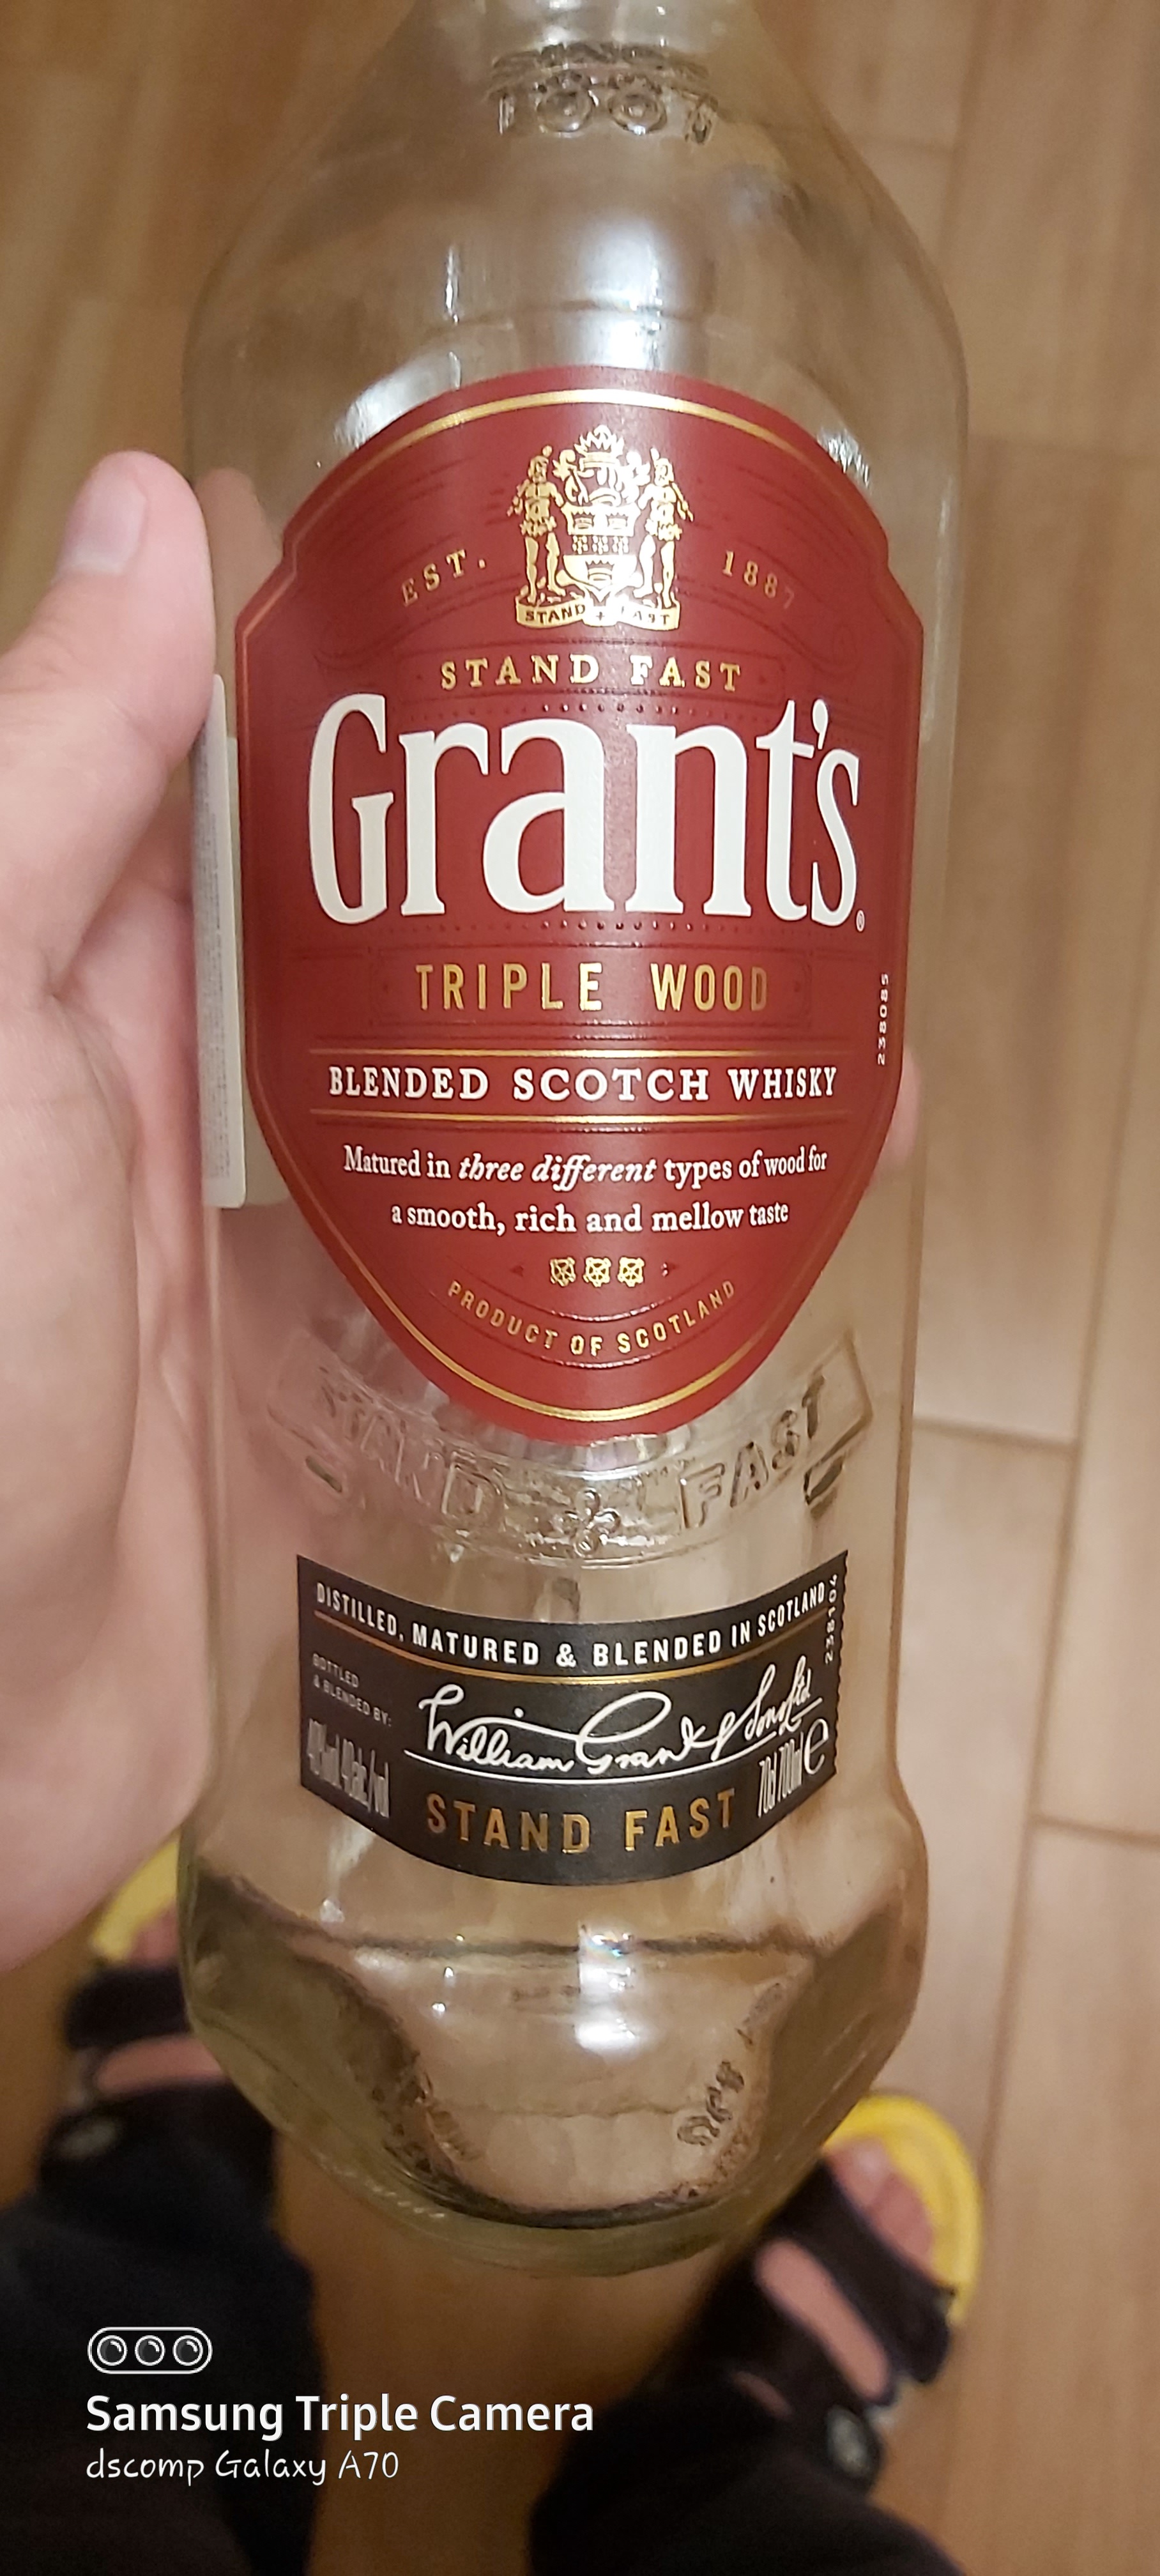 Whisky Grant's Triple Wood. #falamafia #whisky #uisque #mafiadowhisky